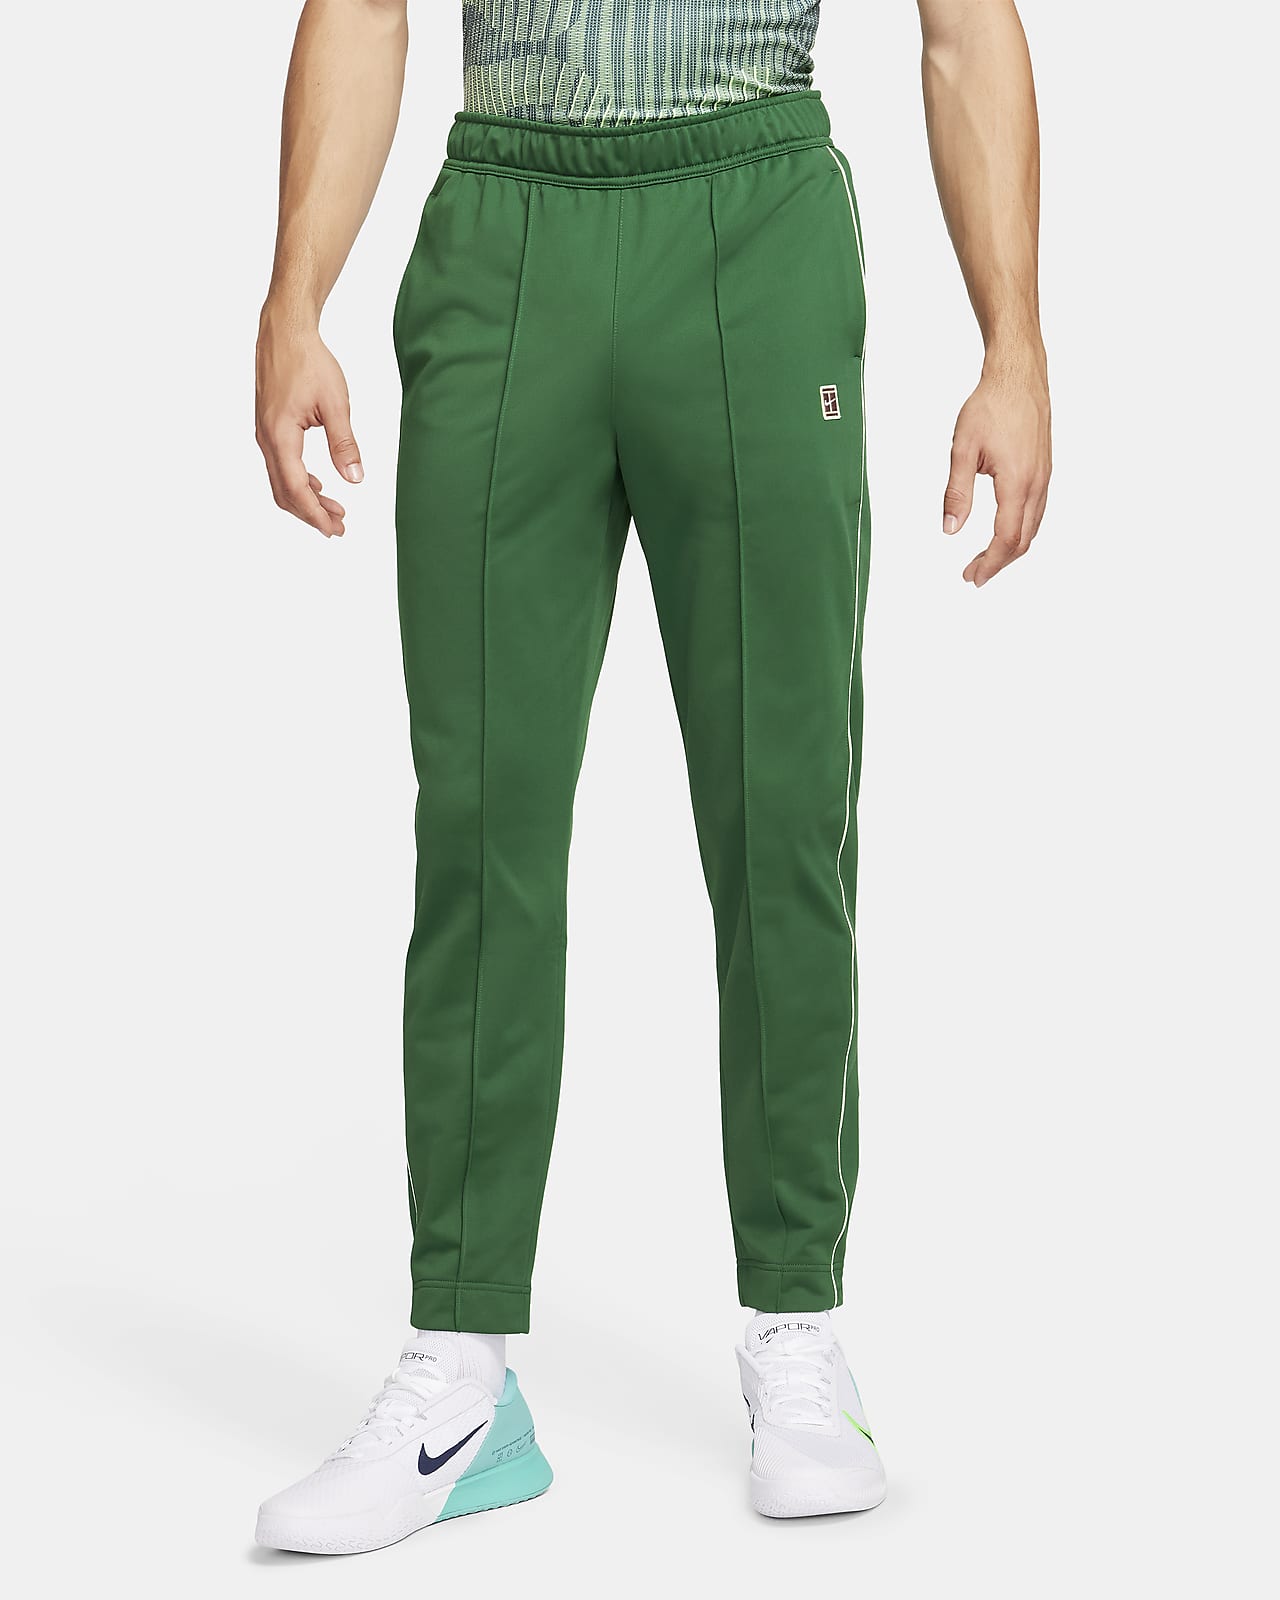 Men's Green Pants, Explore our New Arrivals